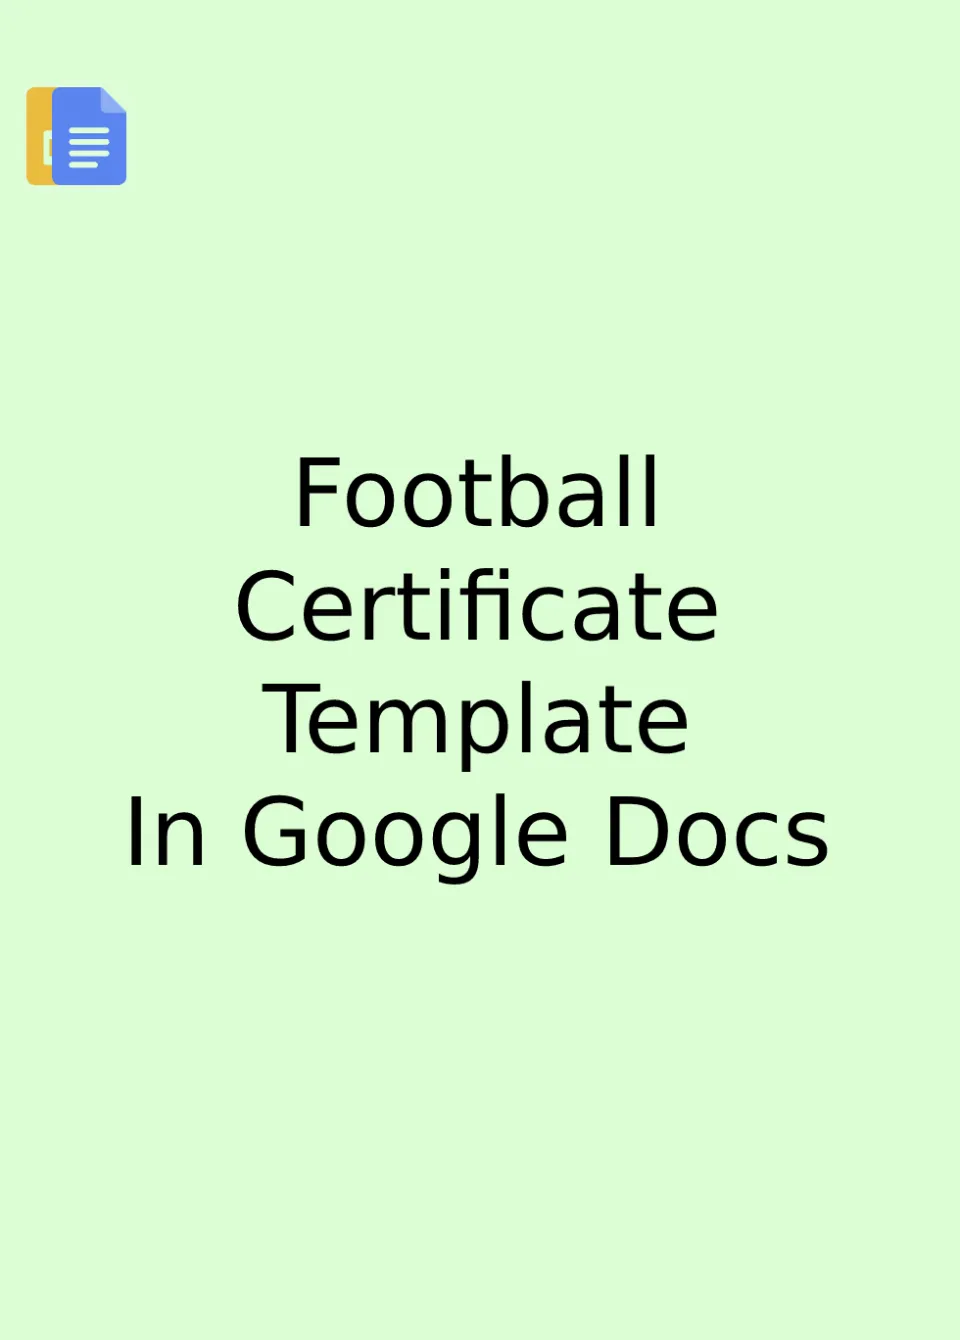 Football Certificate Template Google Docs